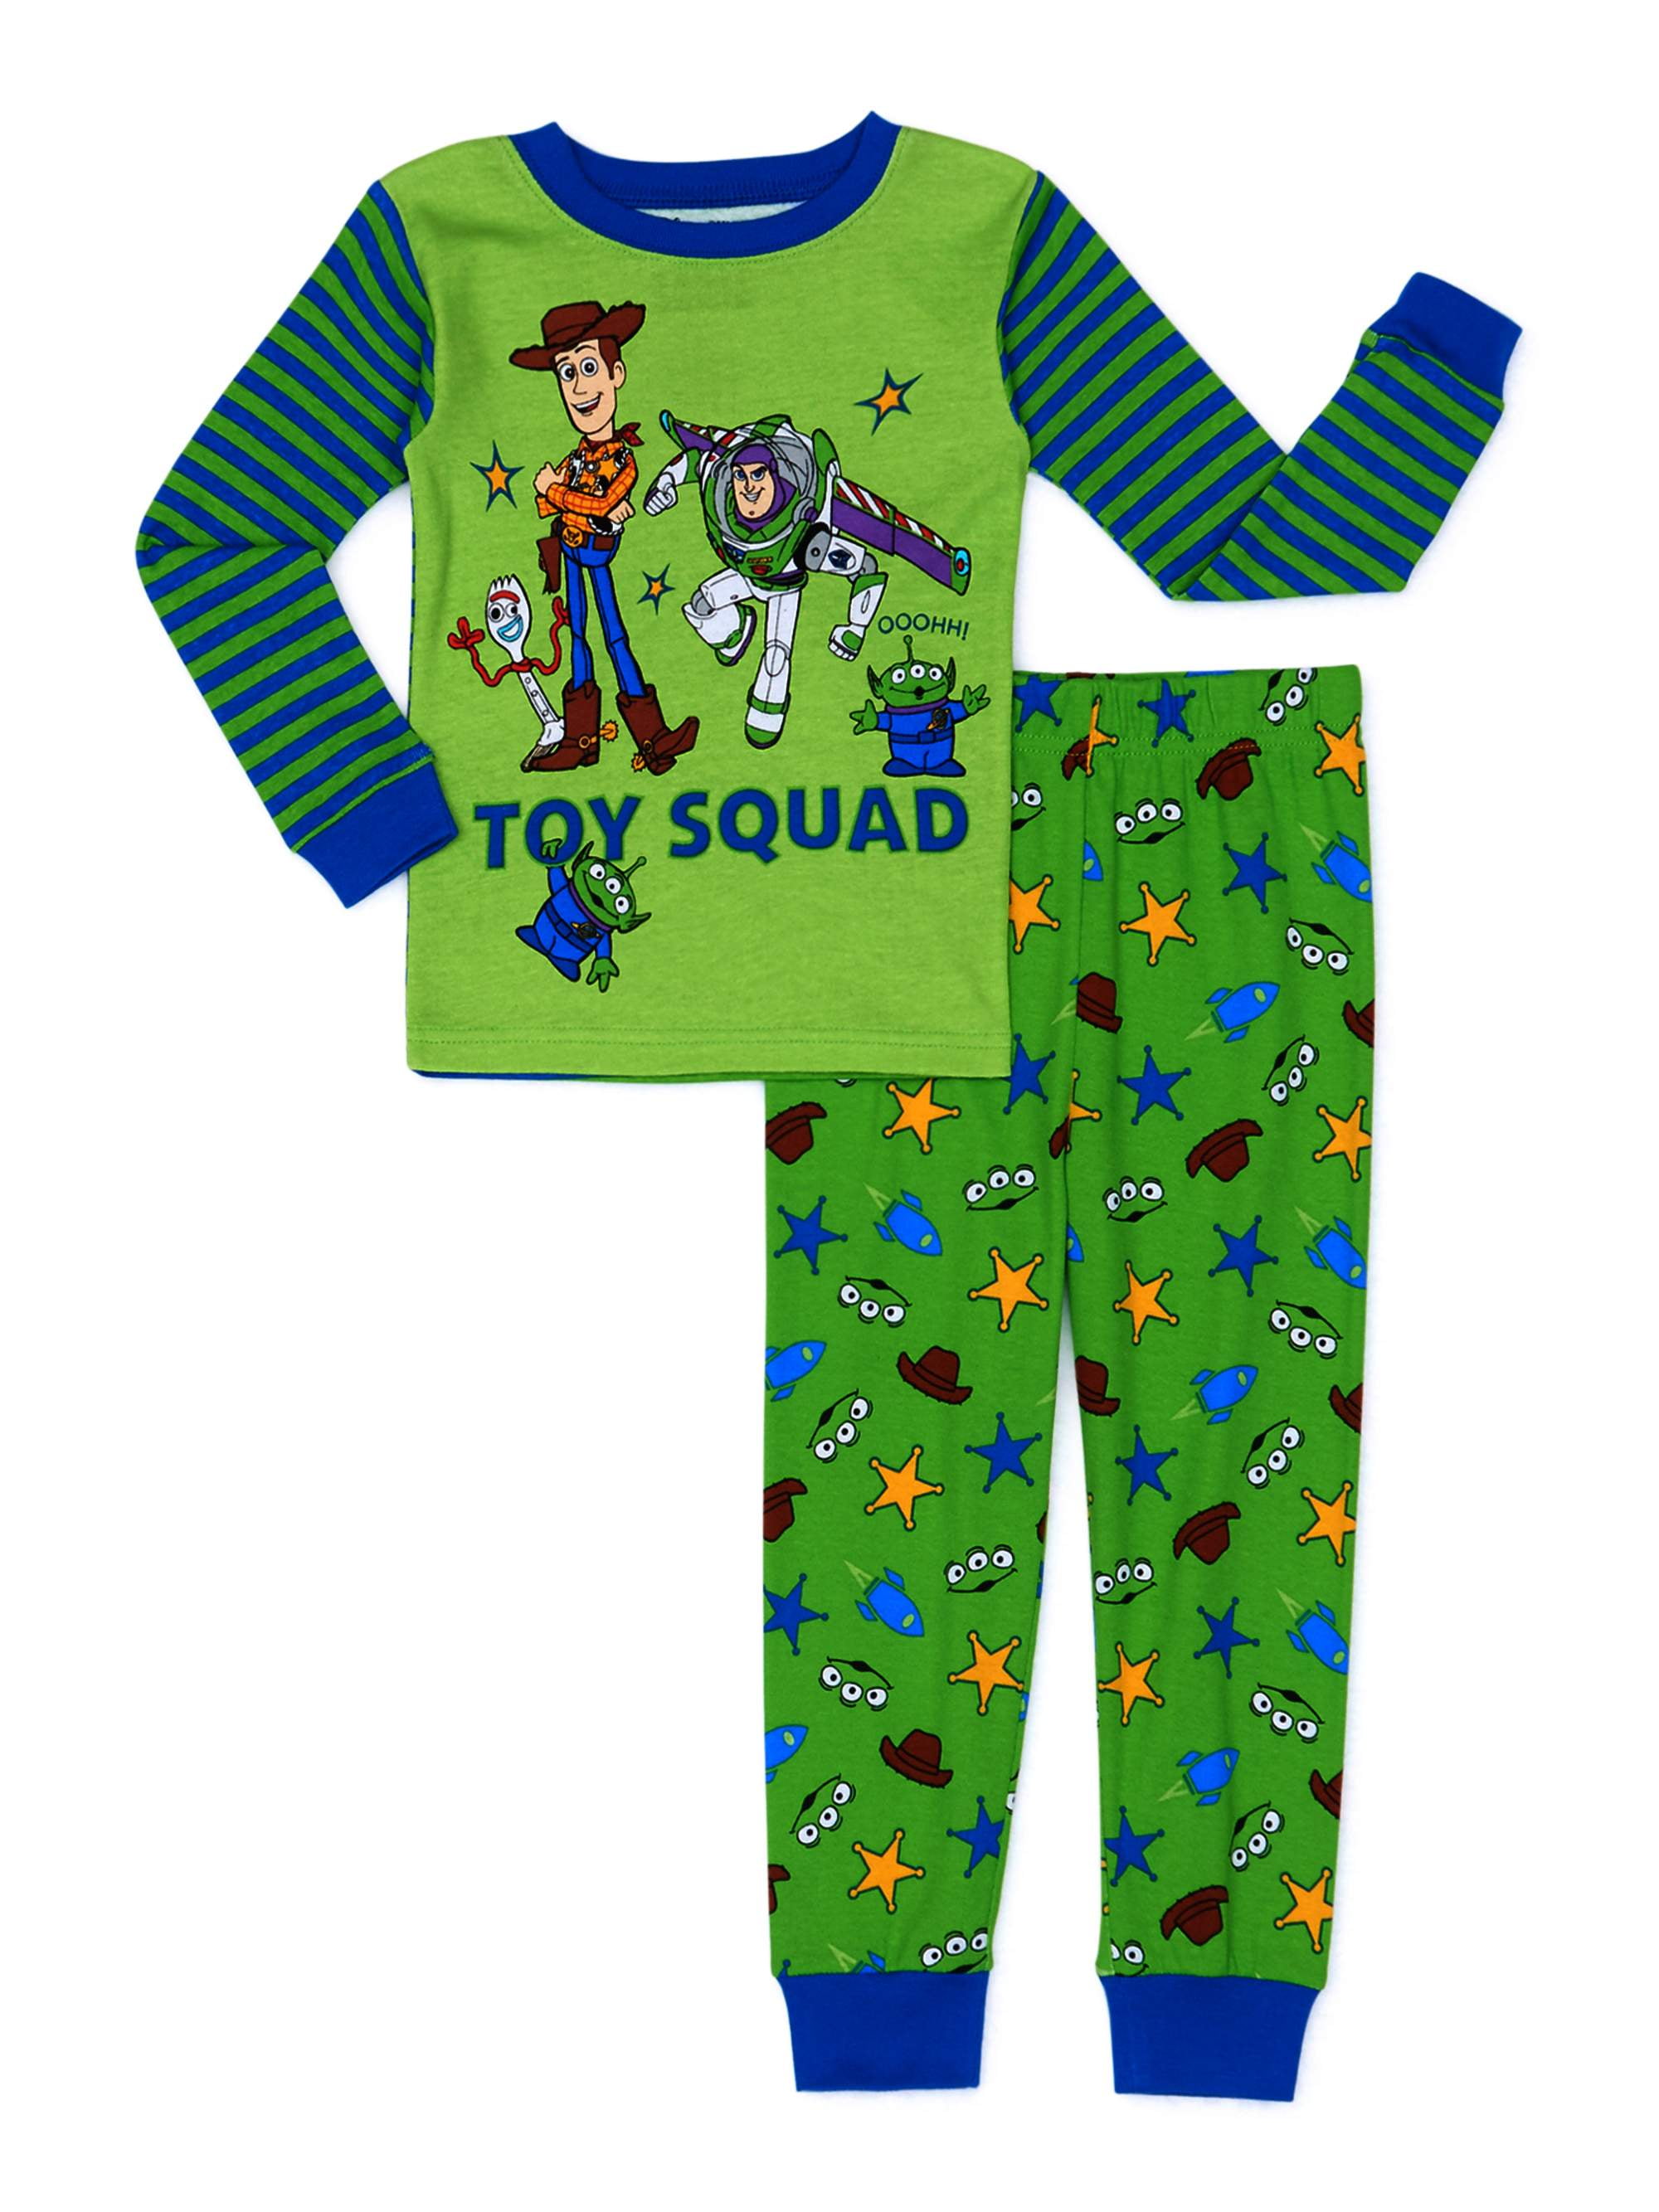 Disney Toy Story Pyjamas Set Boys Kids Toddlers Nightwear 18 Months To 5 Years